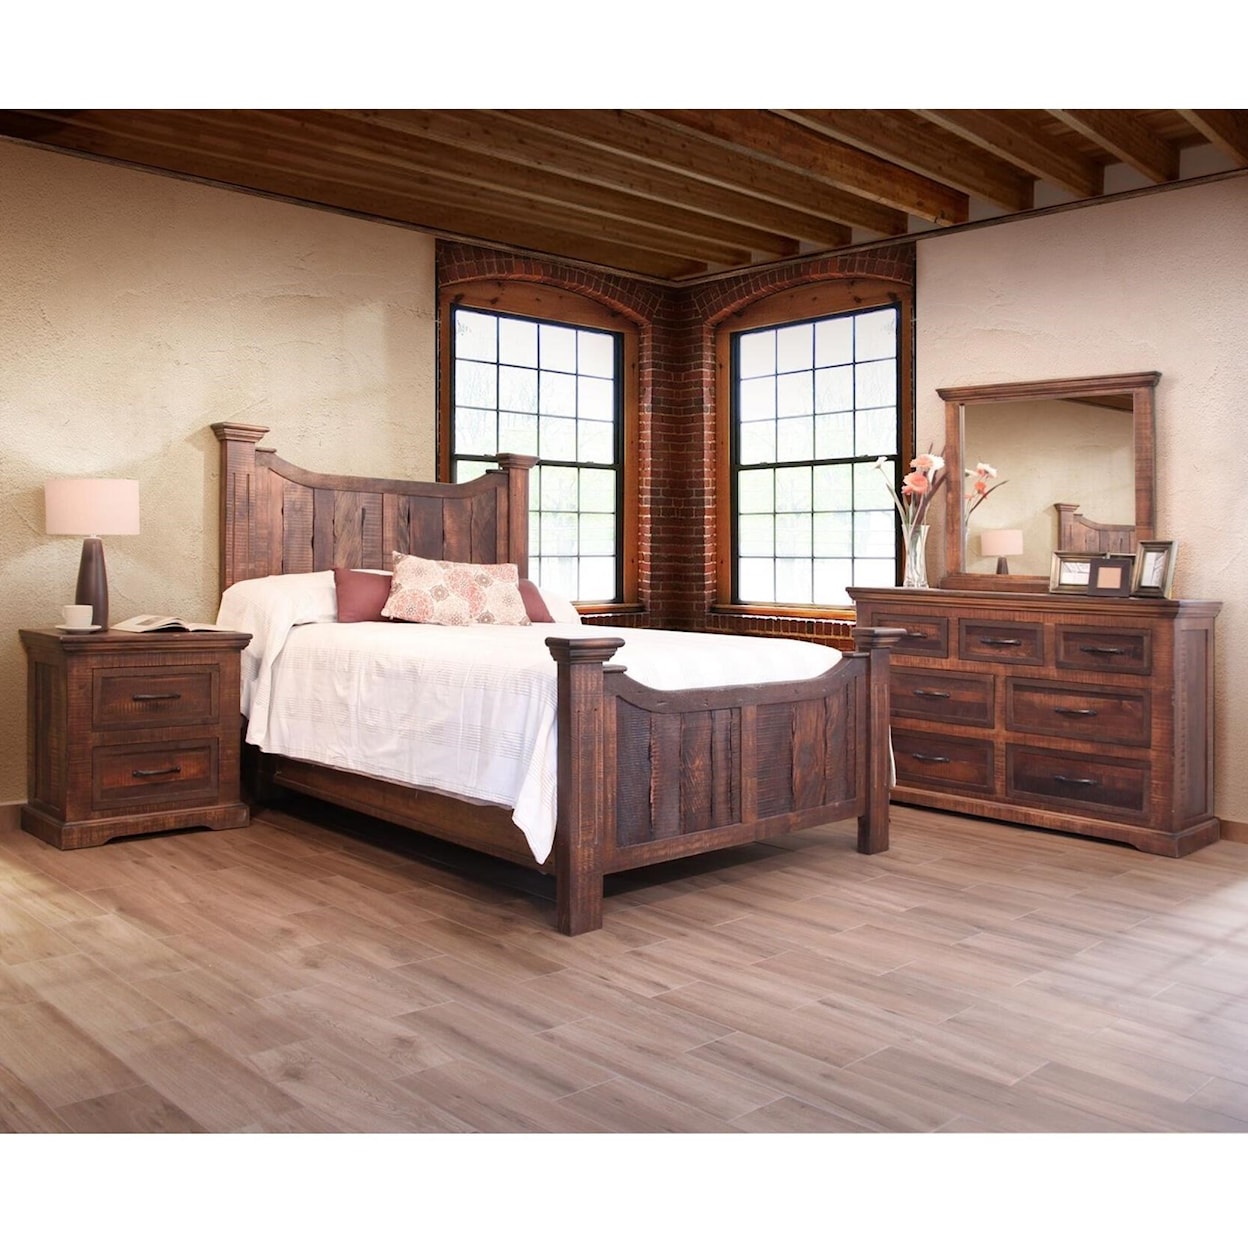 IFD International Furniture Direct Madeira King Bedroom Group